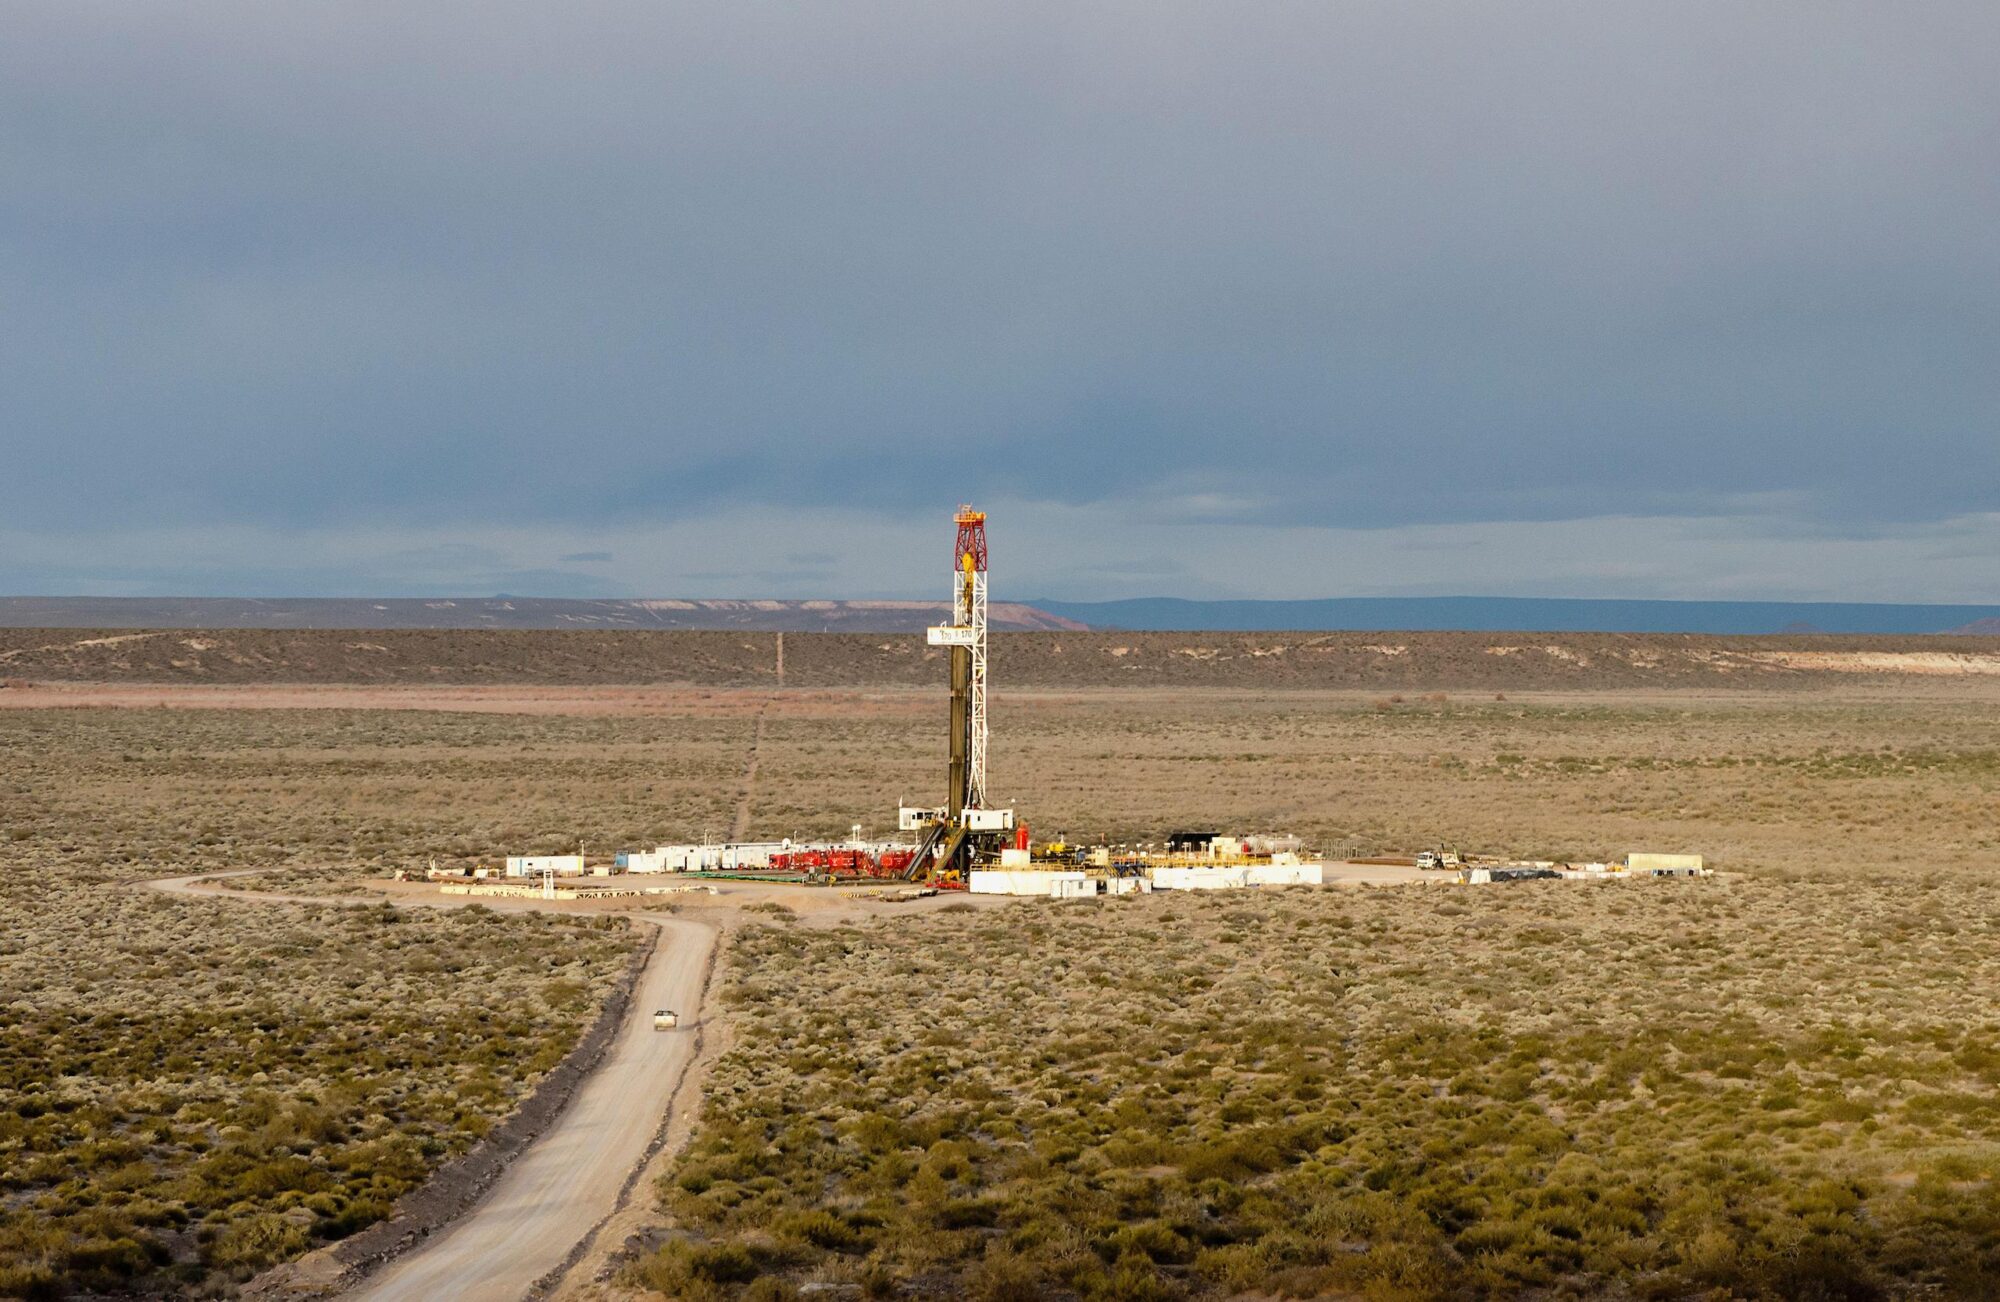 Drilling platform in Vaca muerta, Argentina